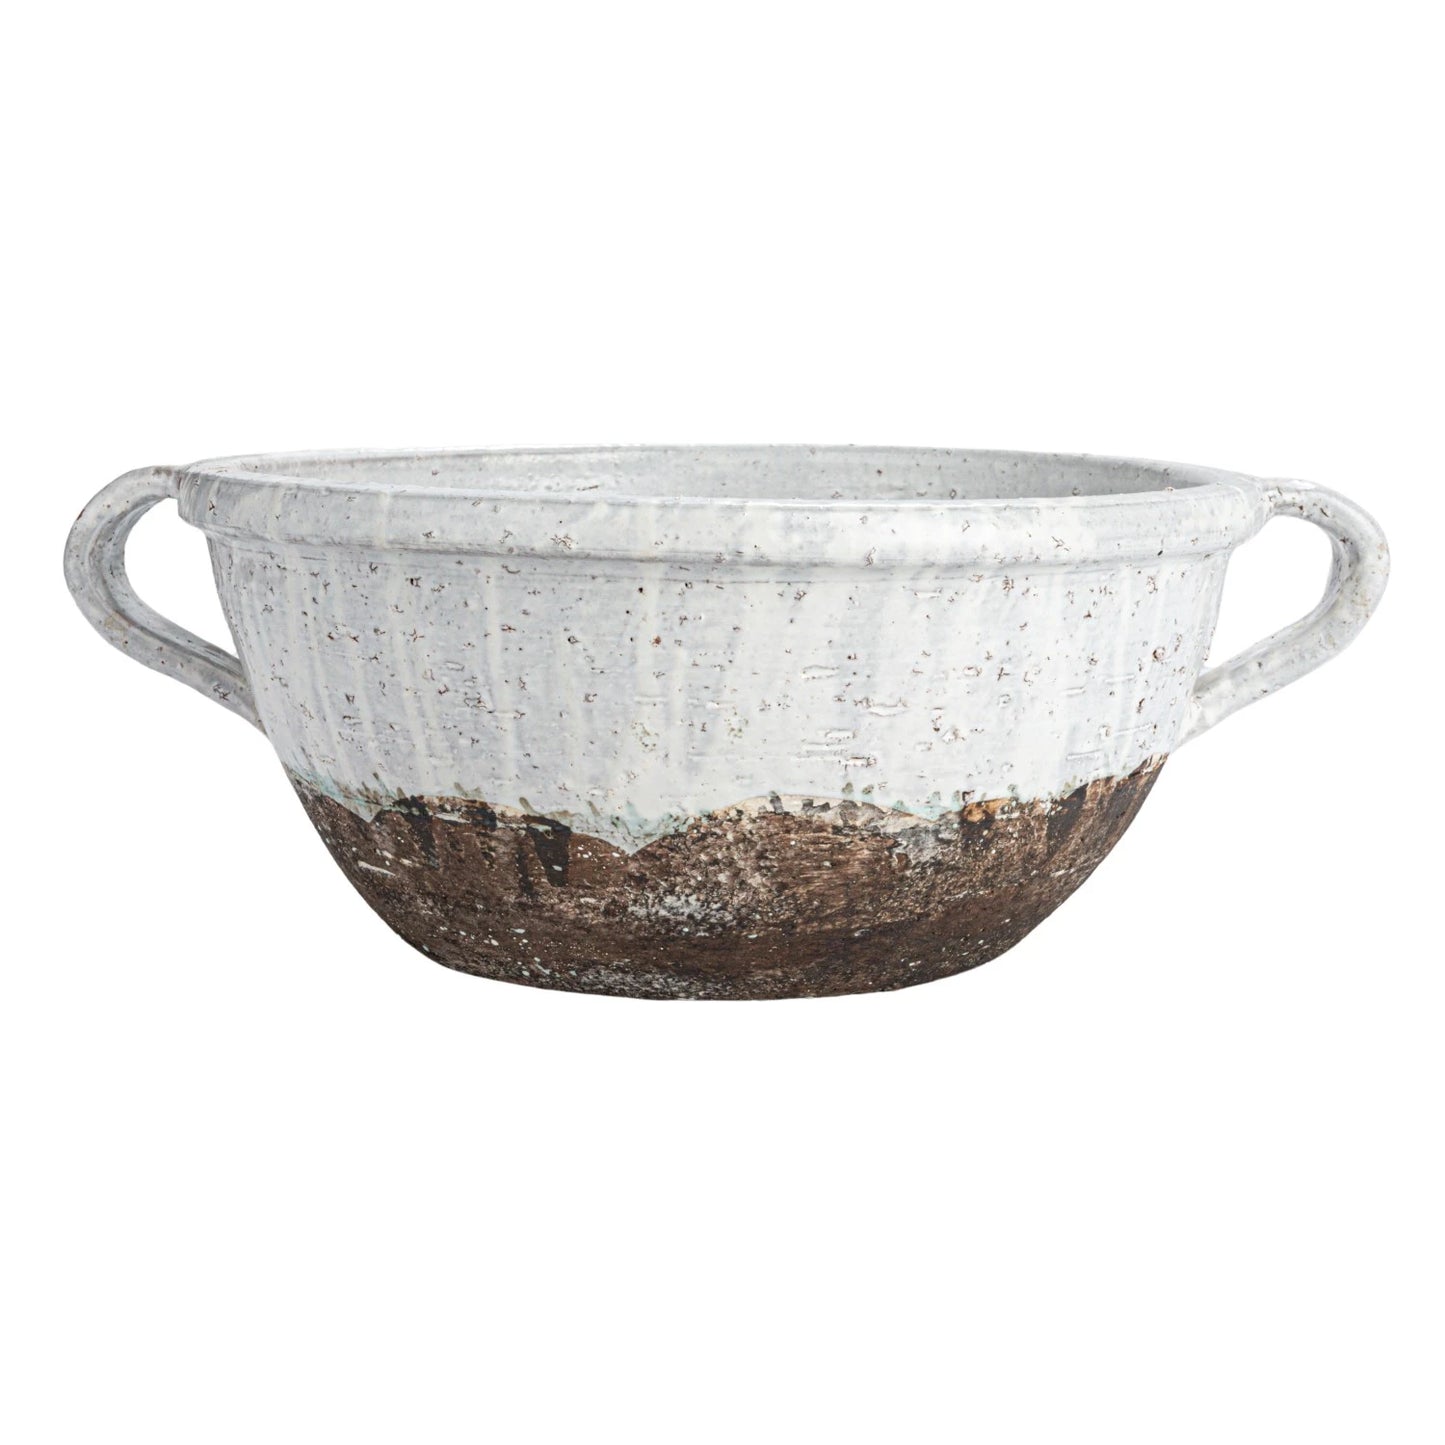 Distressed White Terracotta Bowl